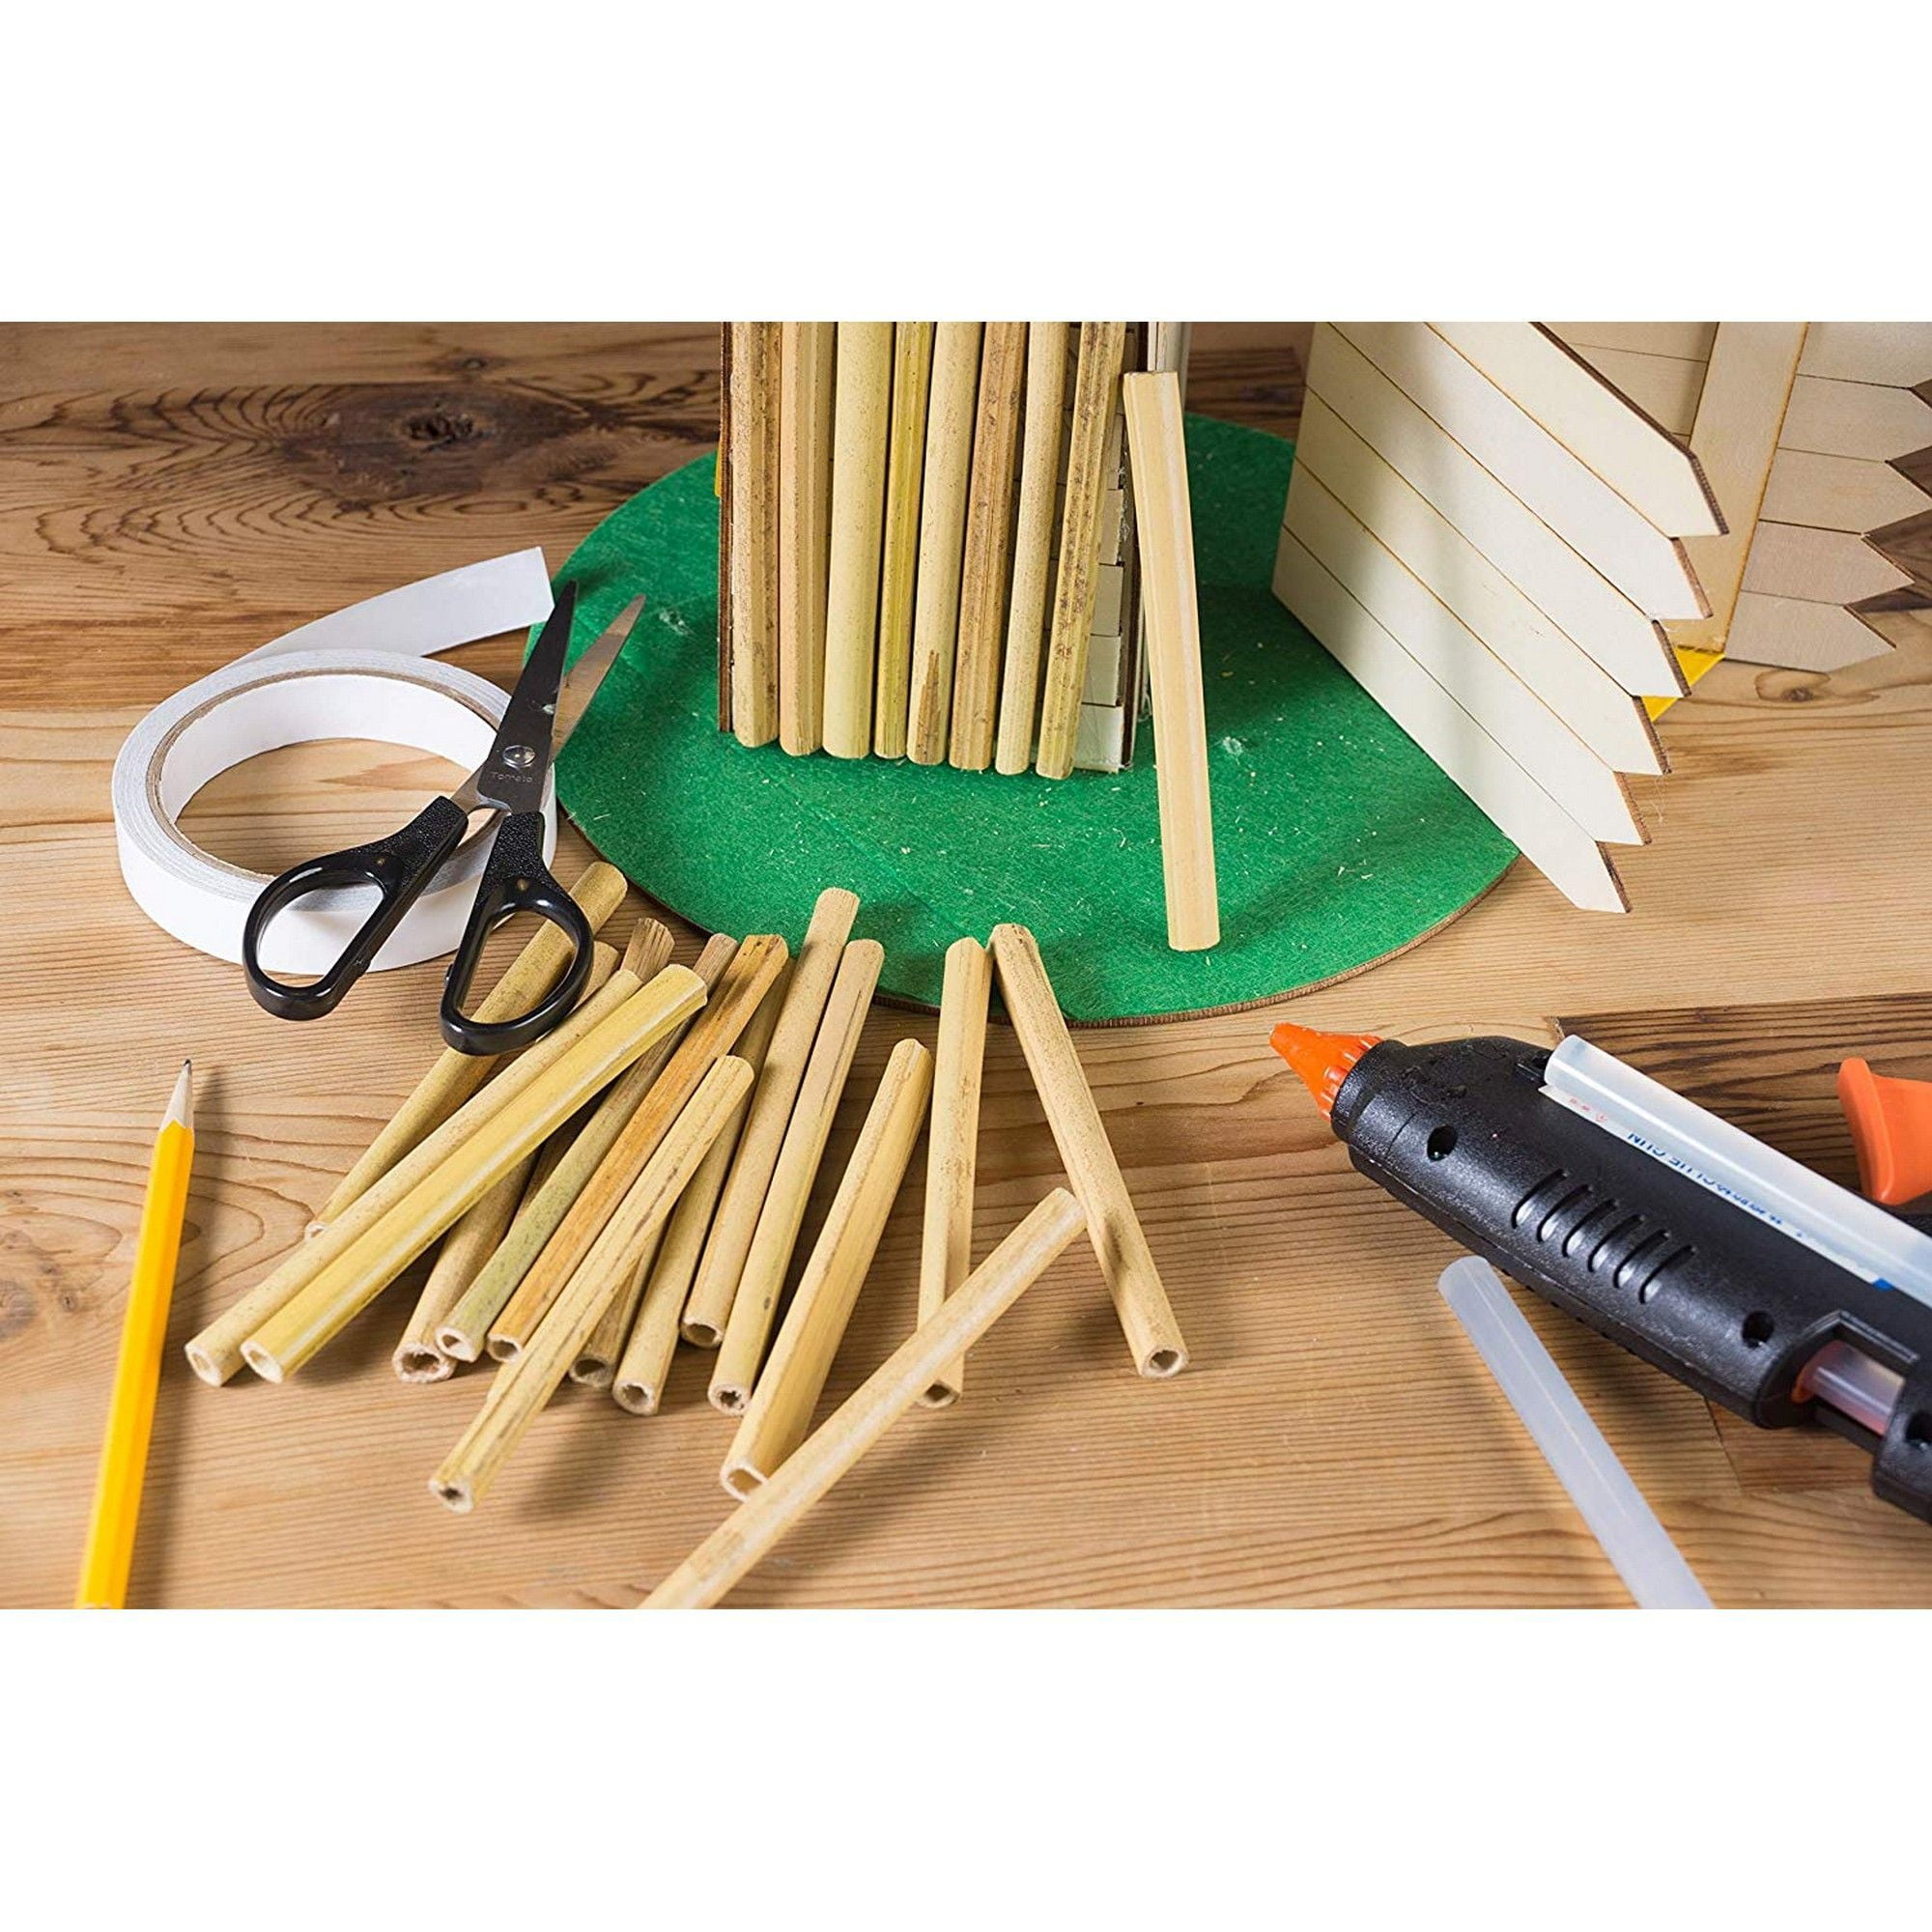 Details about  / 60pcs Natural Bamboo Sticks Wood Craft Sticks Extra Long Sticks for Crafting